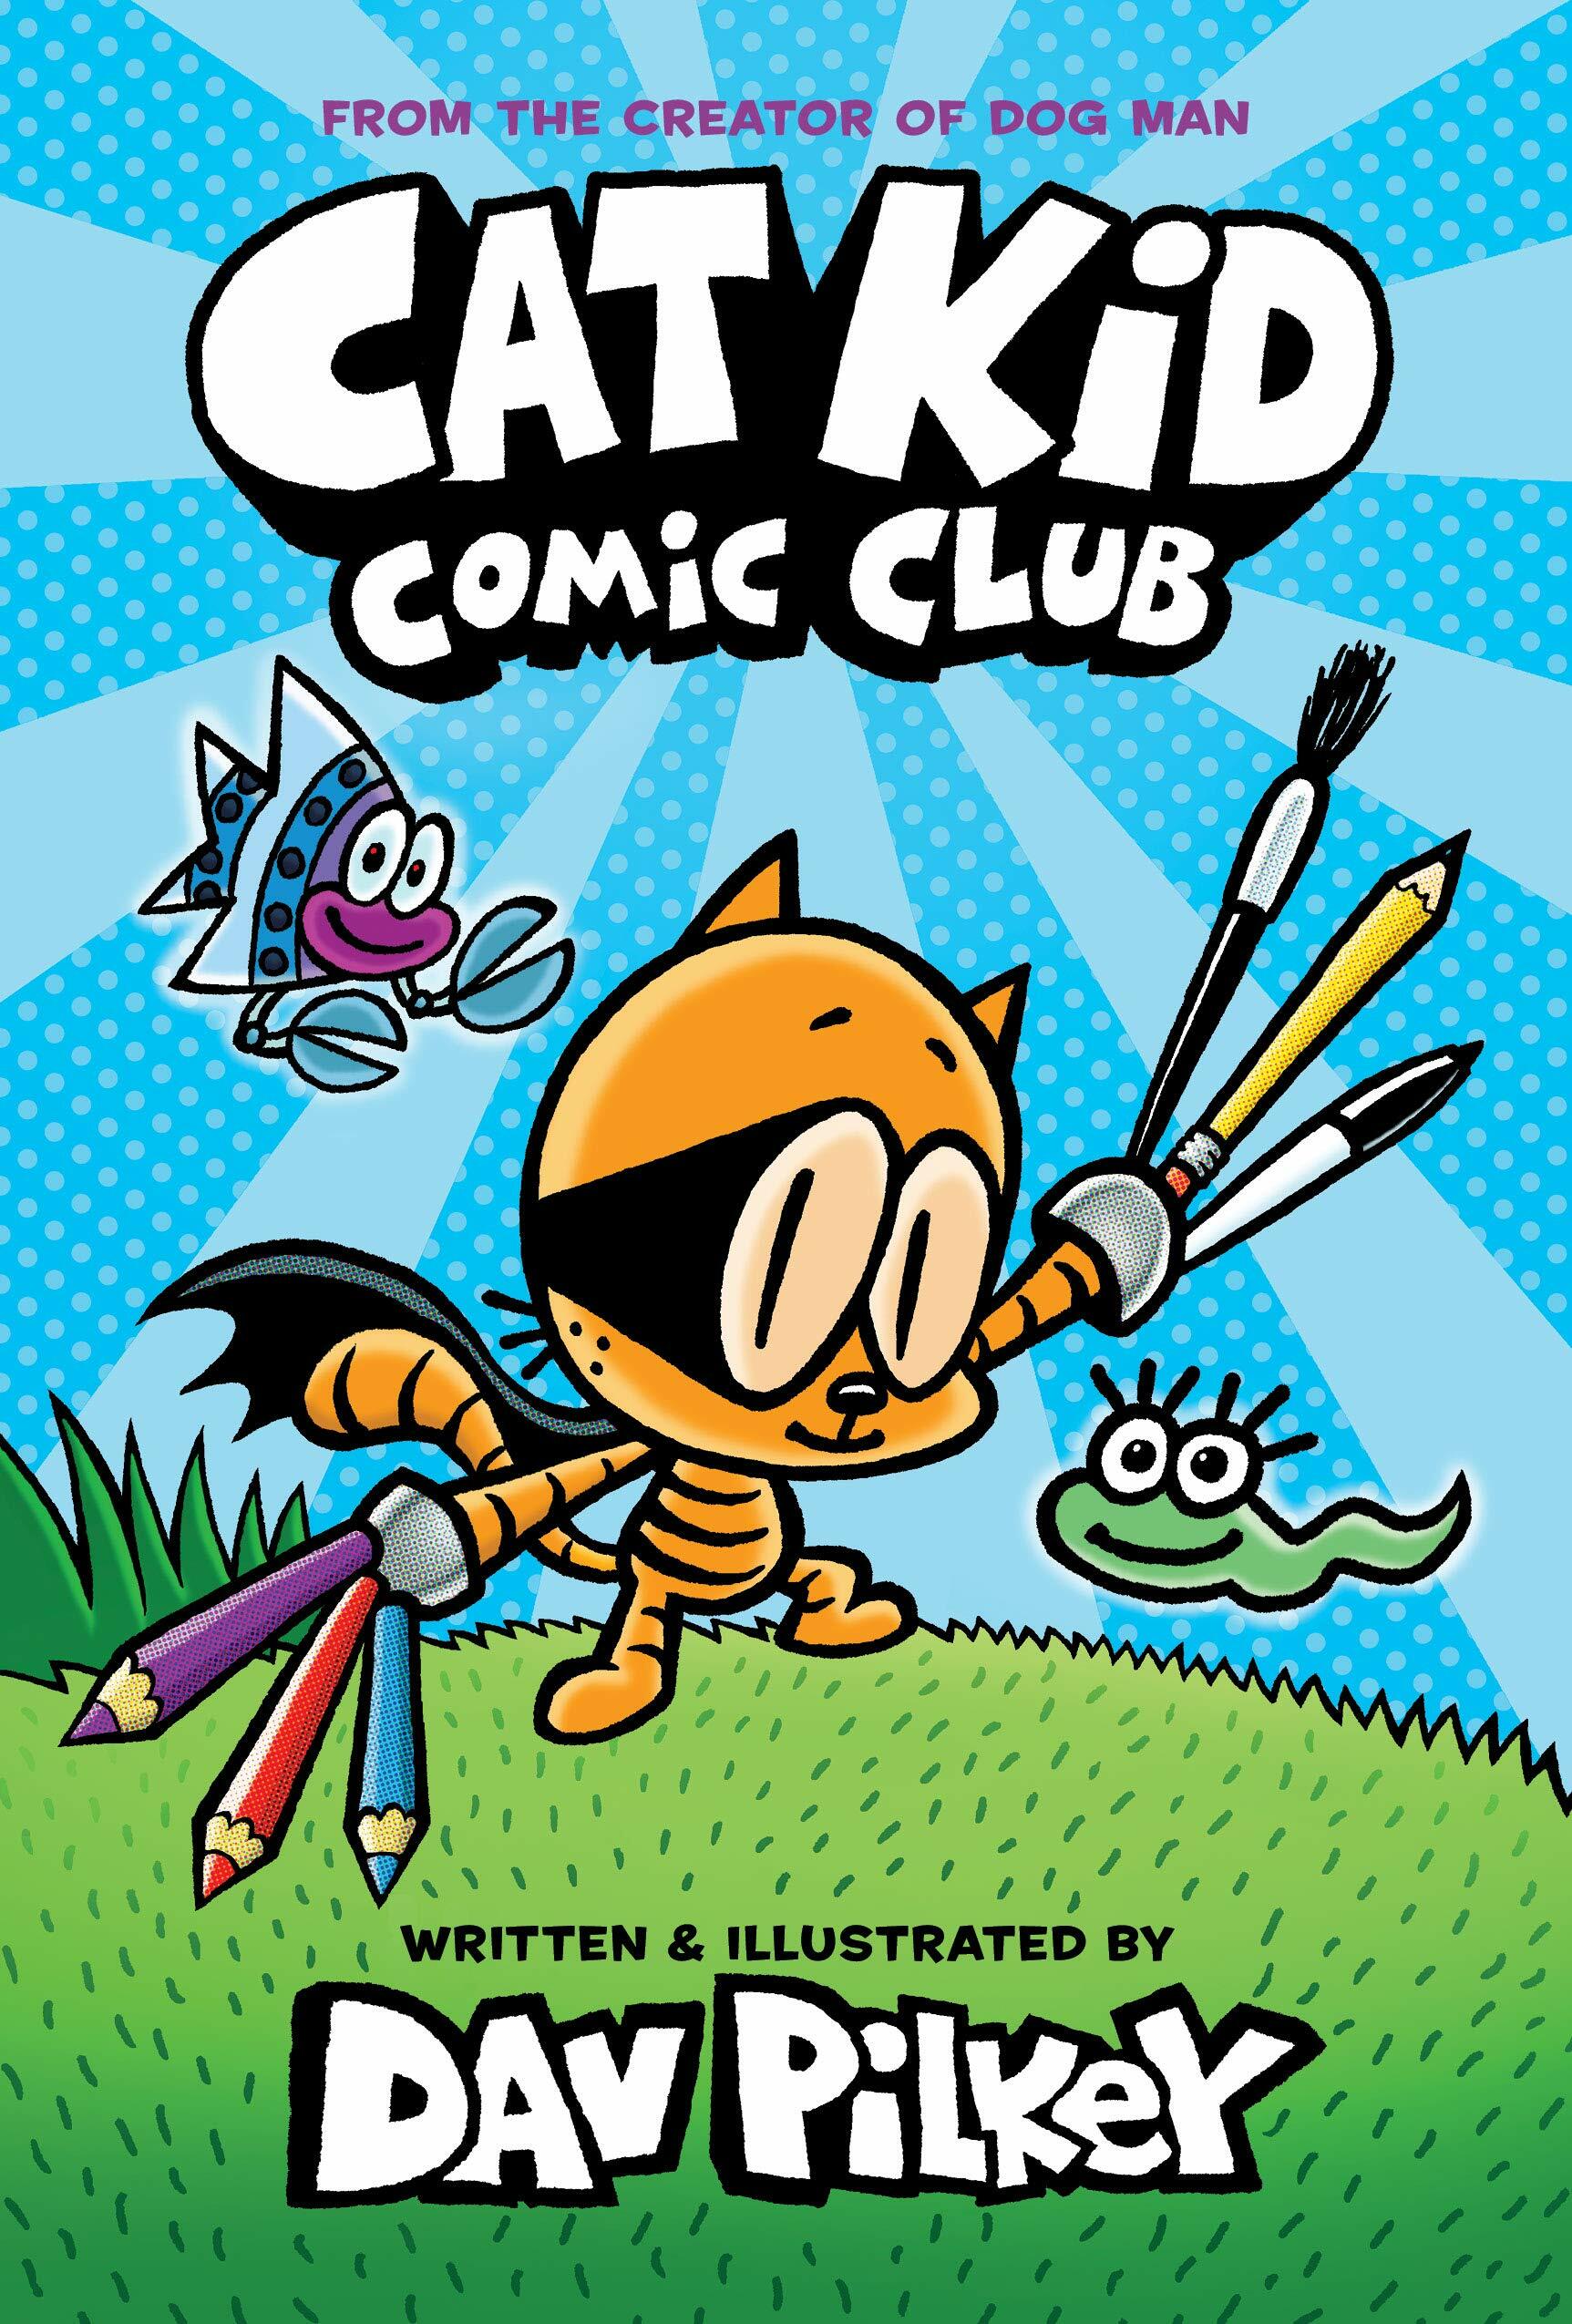 Cat kid comic club : from the creator of dog man